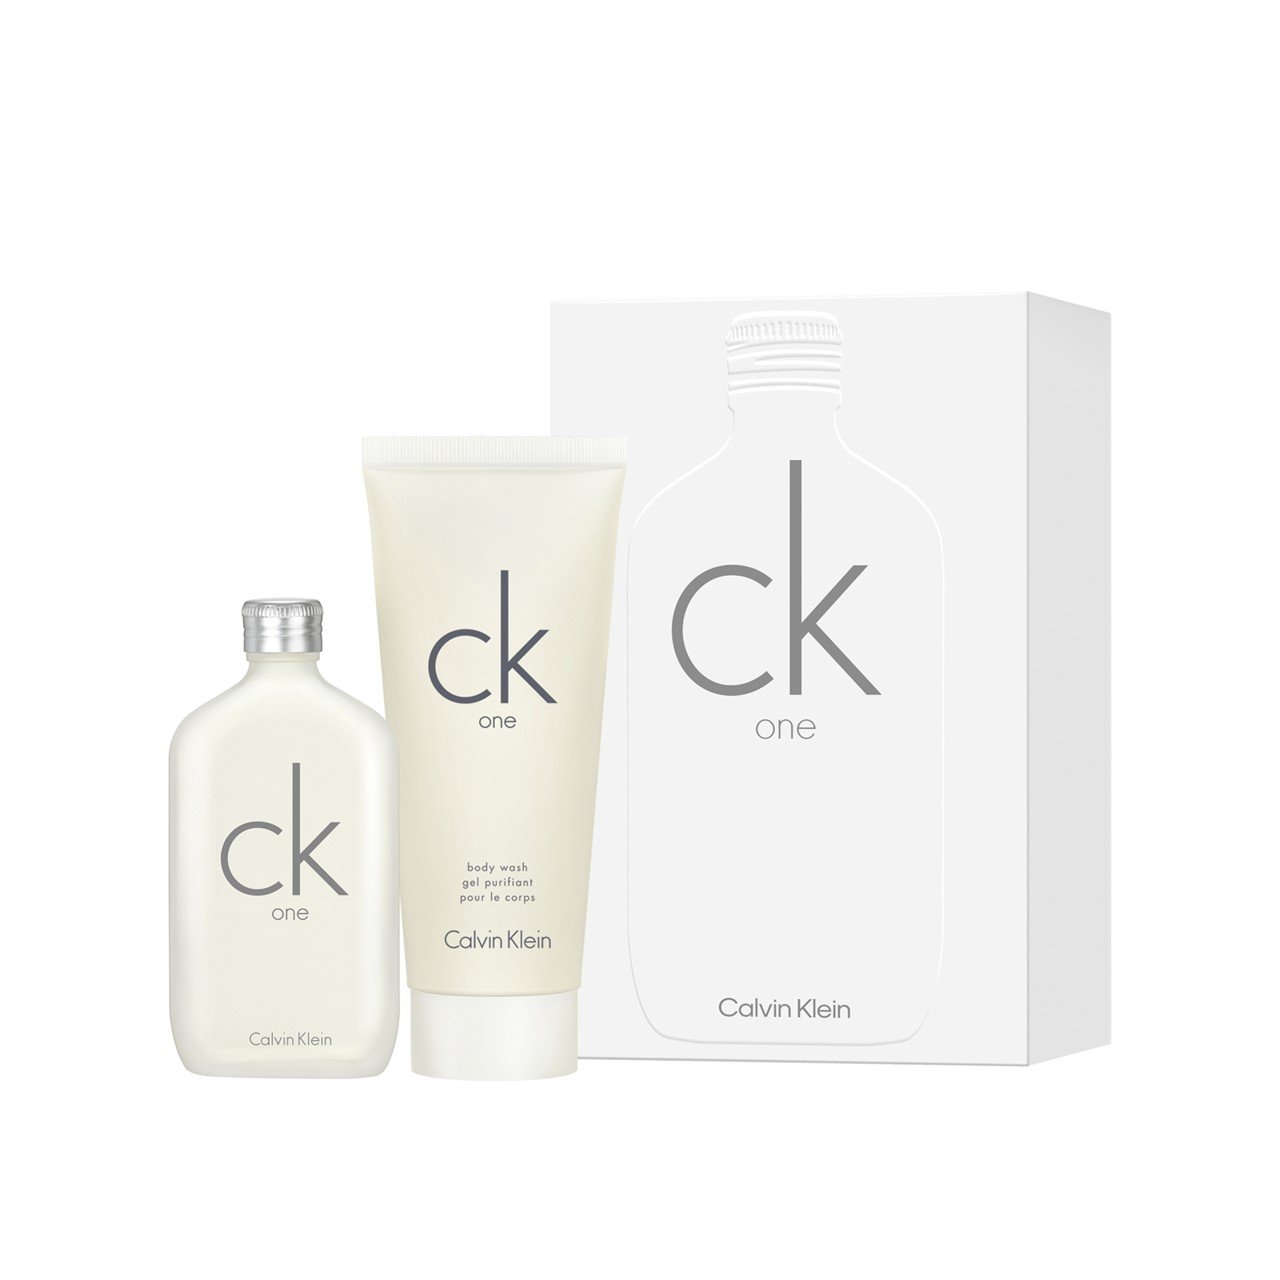 Calvin Klein CK One Eau de Toilette 50ml + Body Wash 100ml (1.7+3.38fl oz)